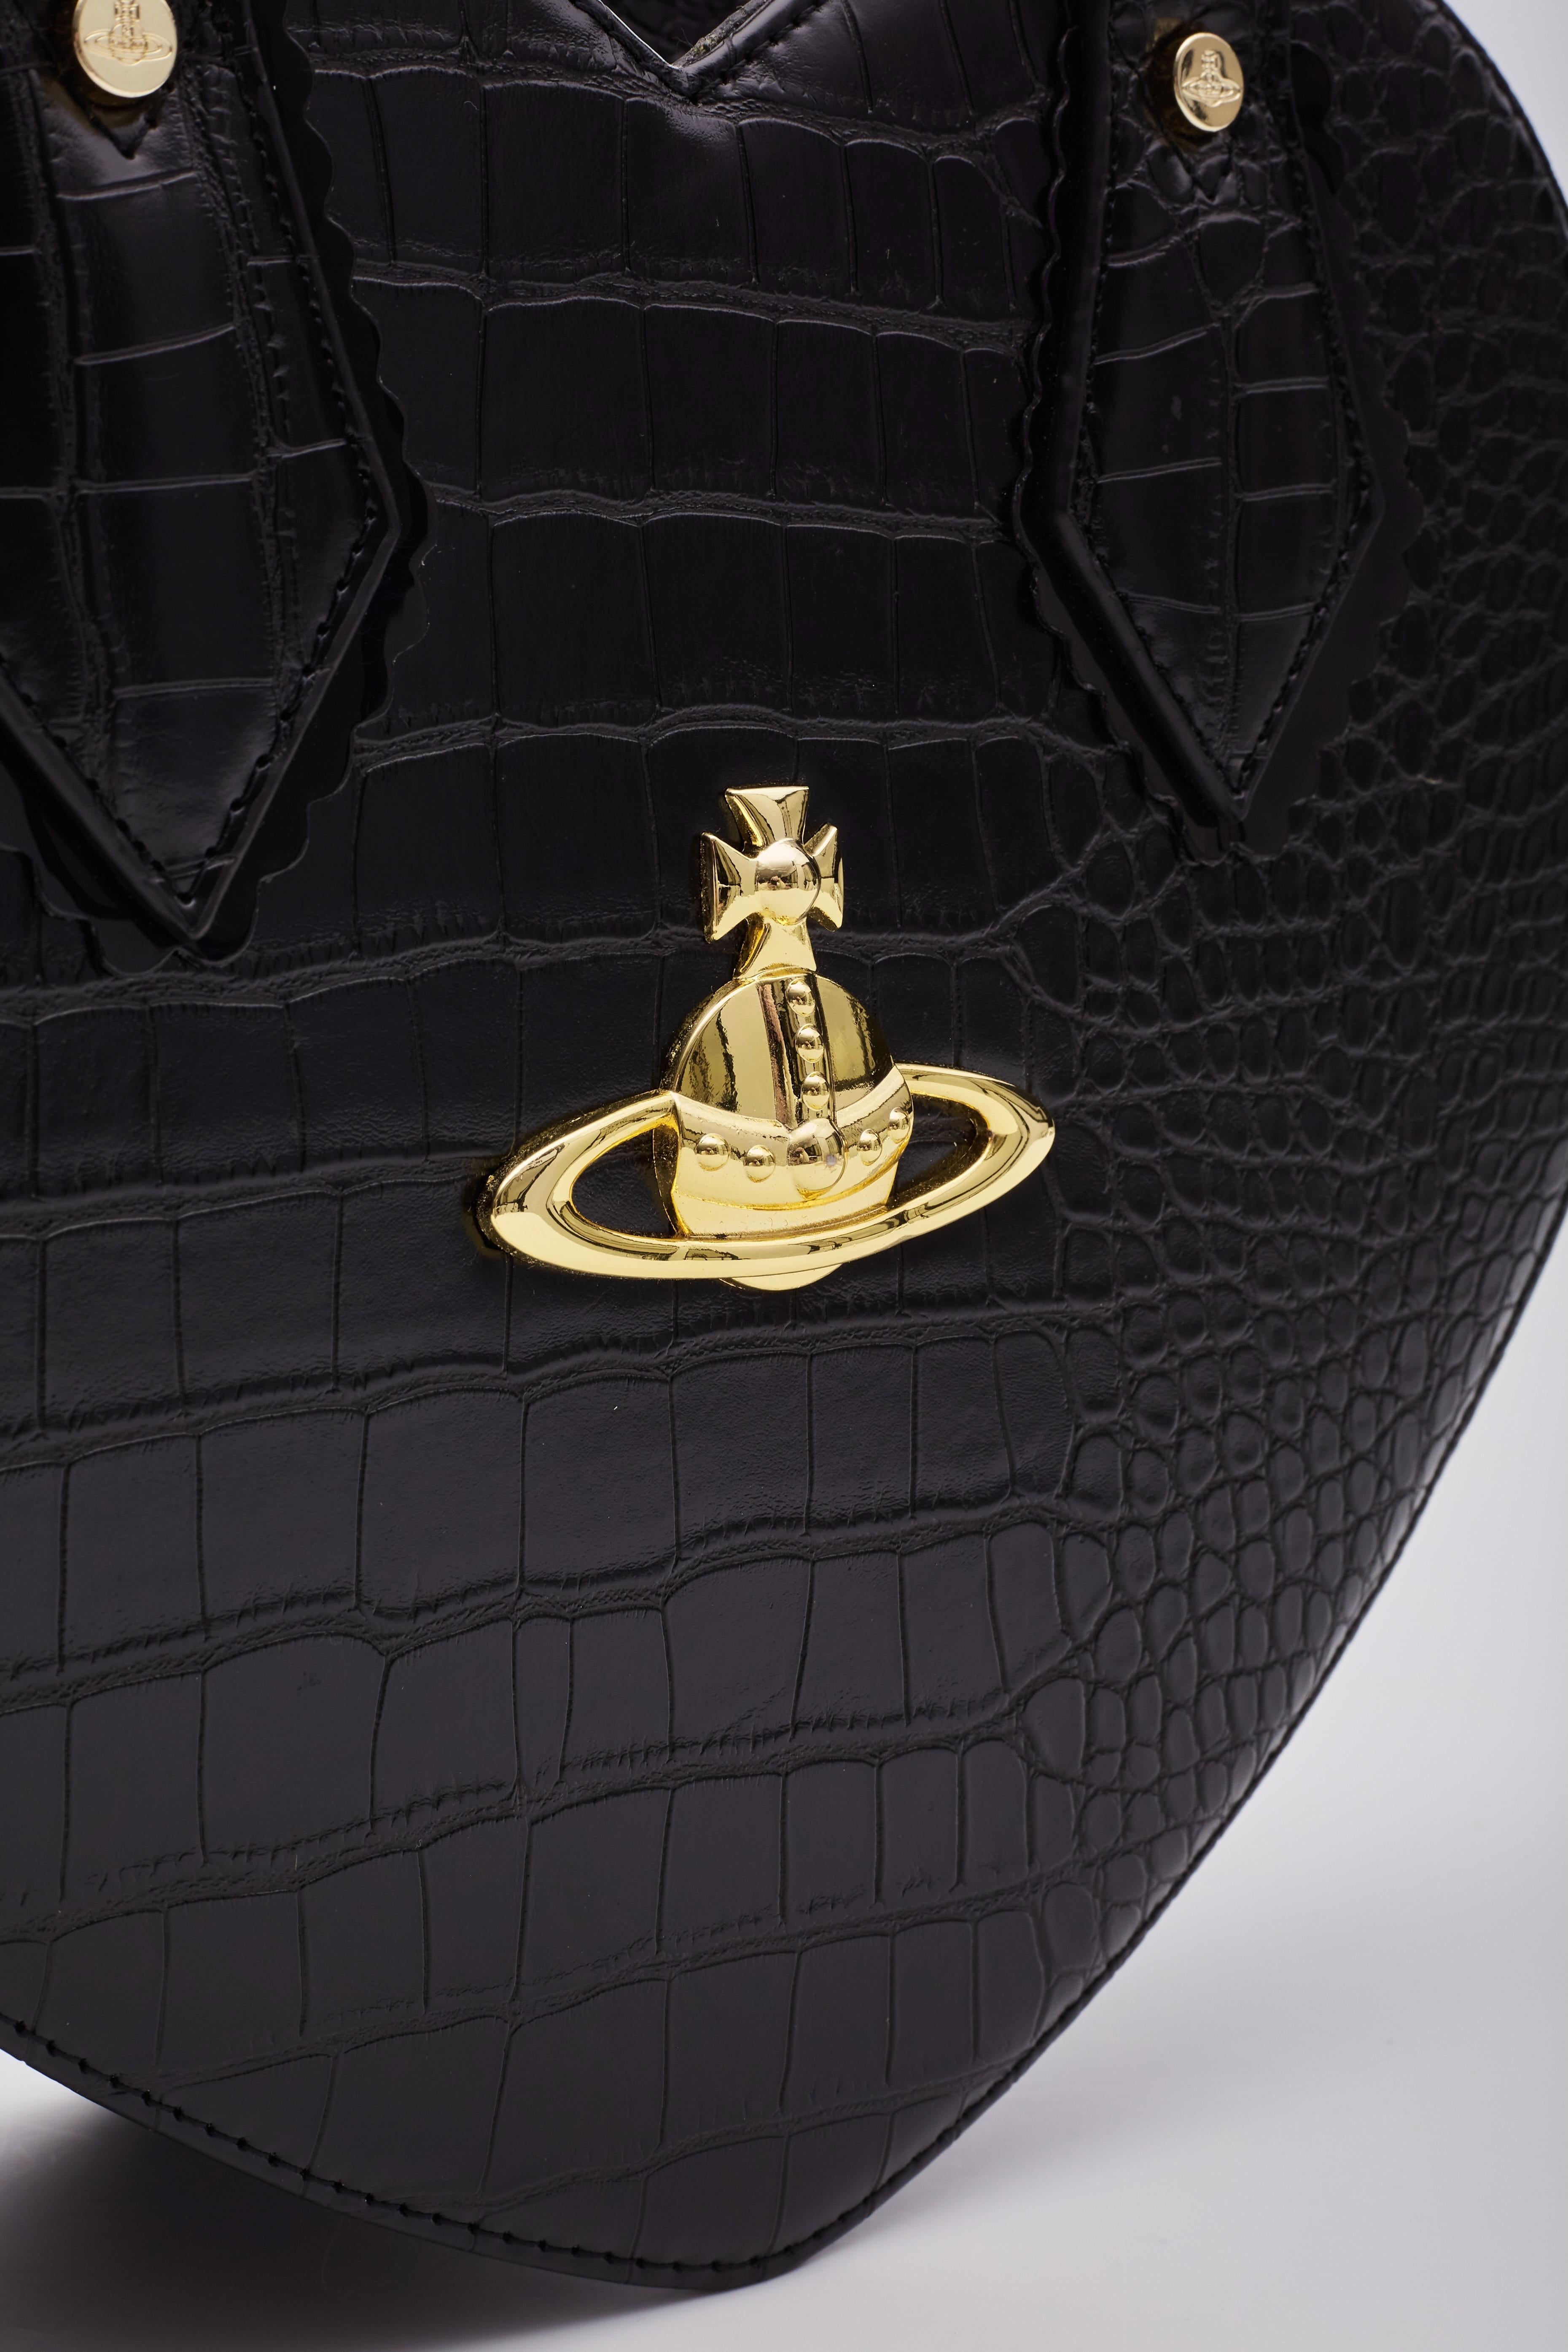 Vivienne Westwood Black Croc Embossed Chancery Heart Handbag For Sale 3